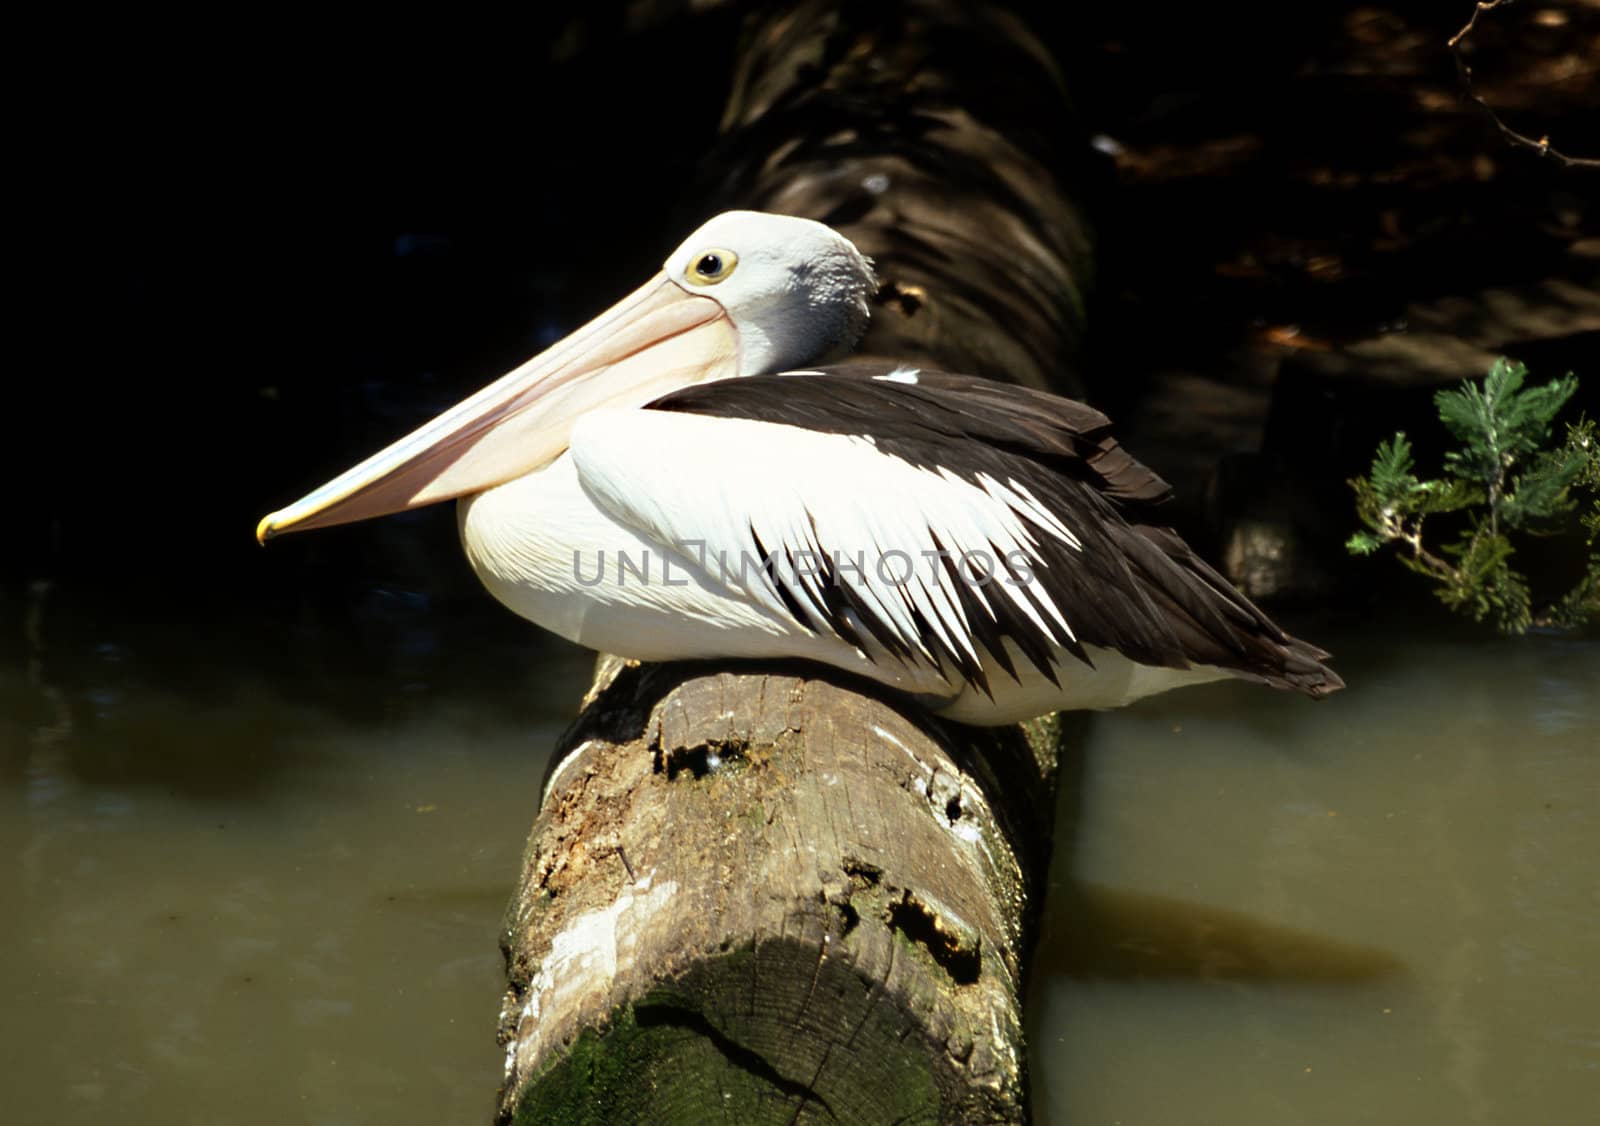 Australian Pelican sitting on a log by a river